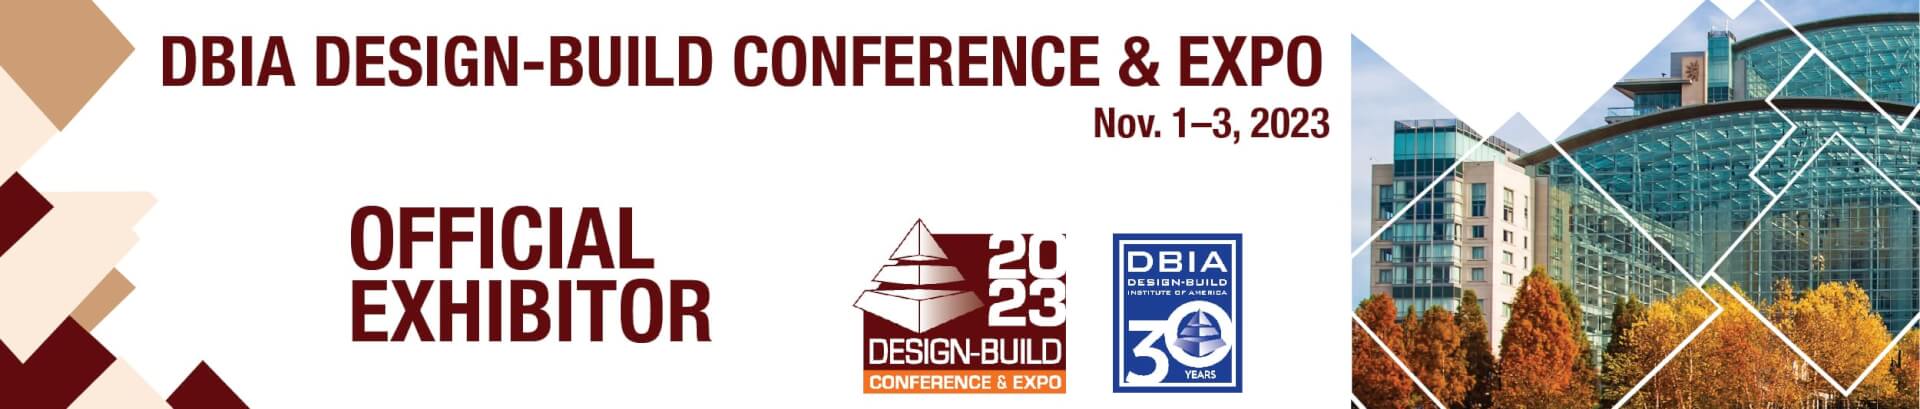 DBIA Design-Build Conference & Expo